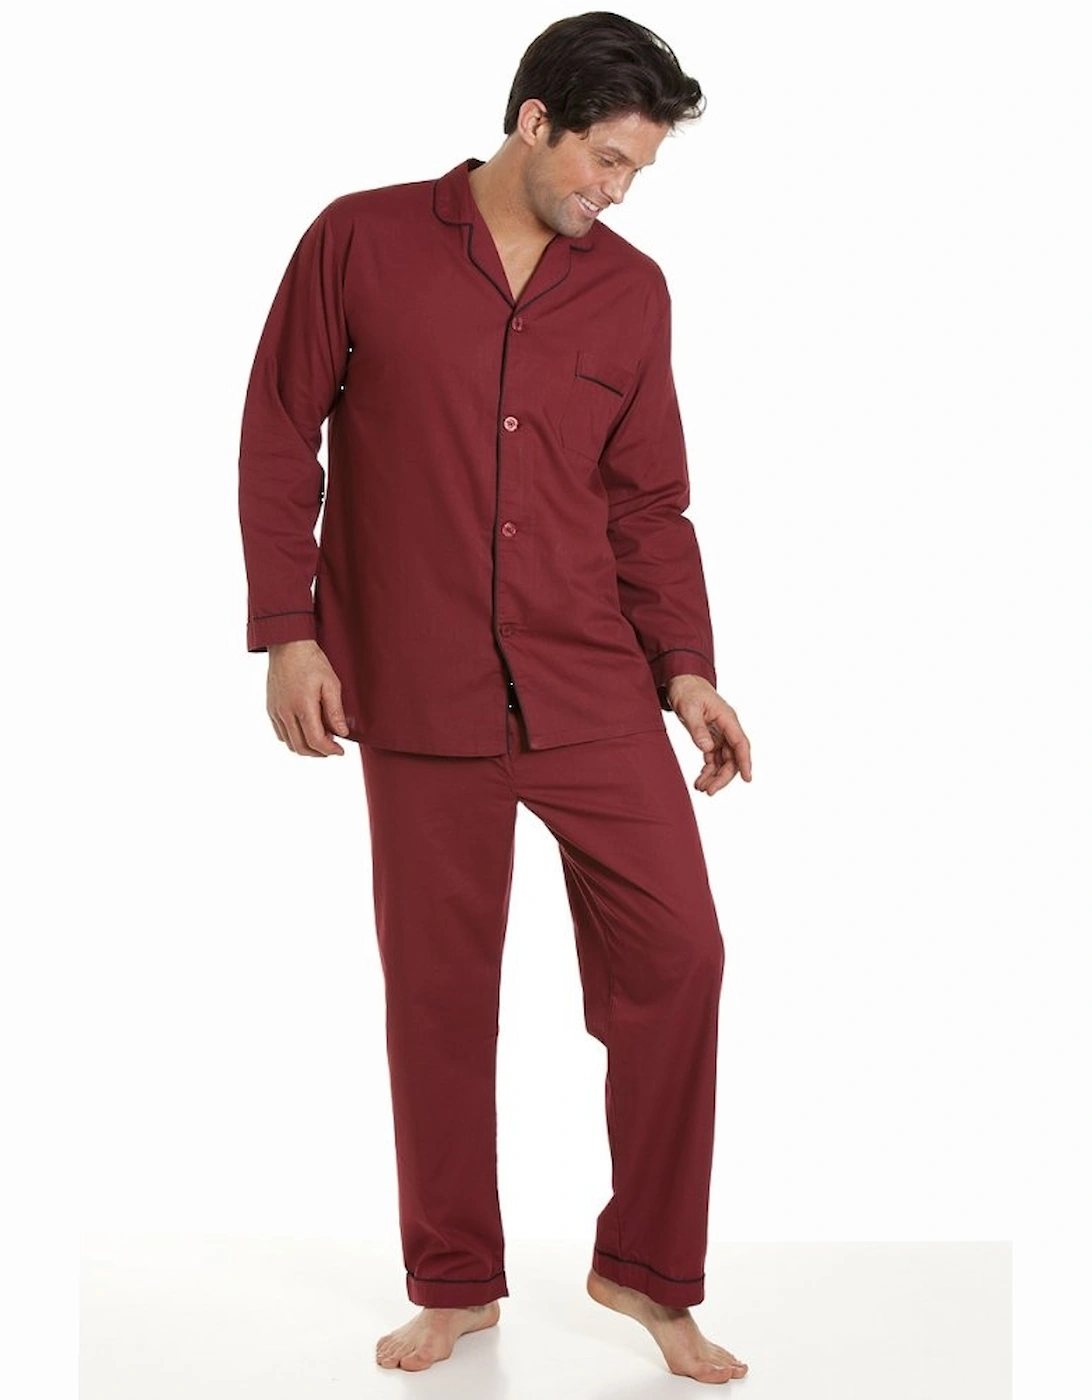 Classic Style Mens Full Length Burgundy Red Pyjama Set